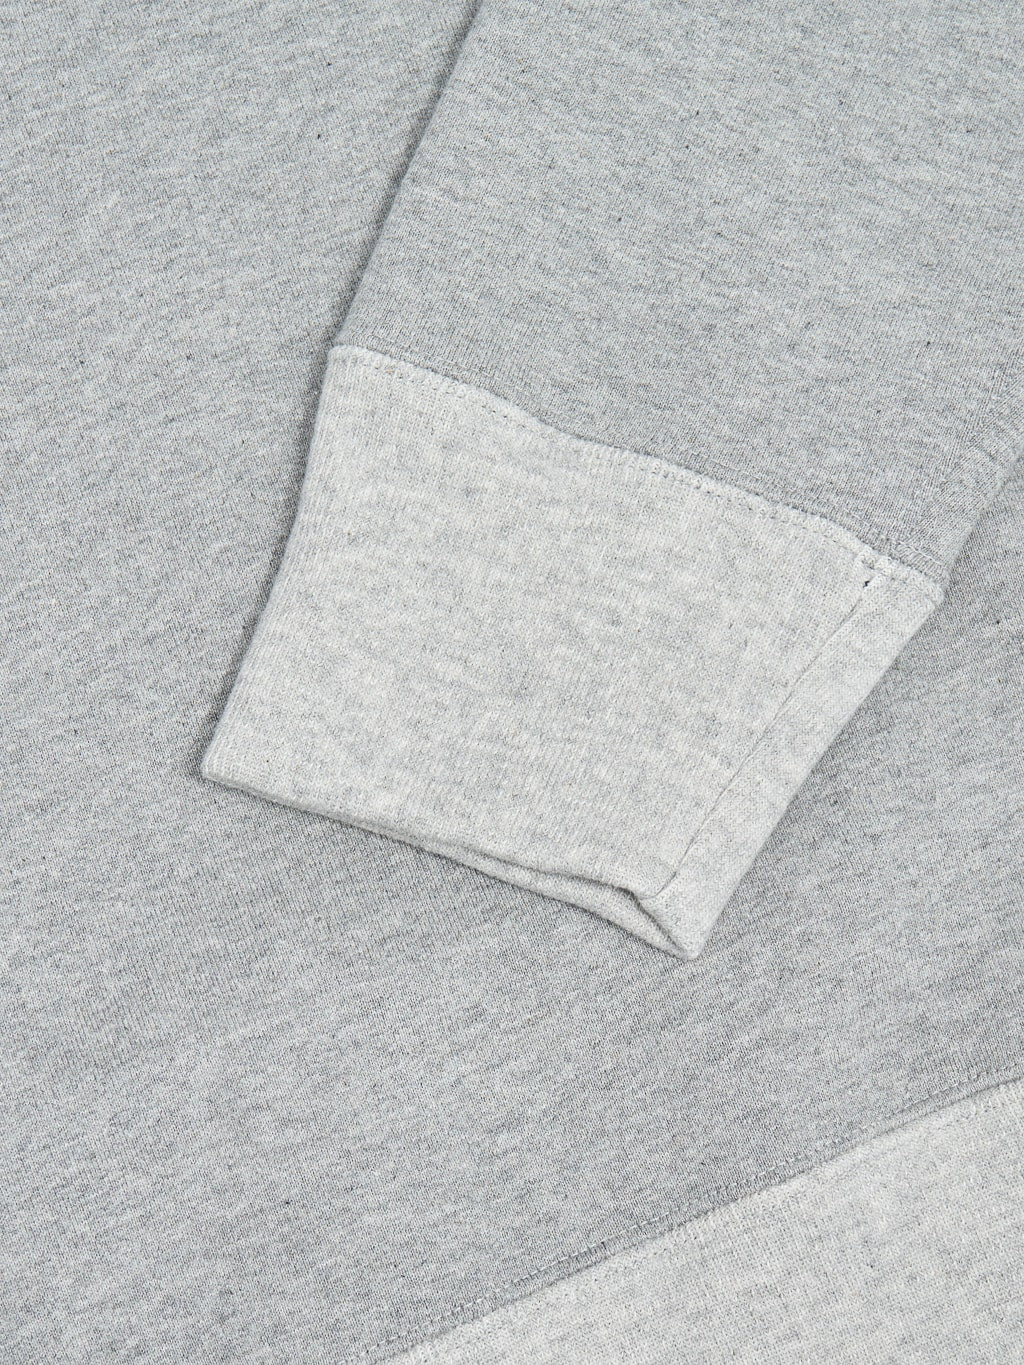 Merz b schwanen loopwheeled sweatshirt heavy grey elastic cuff